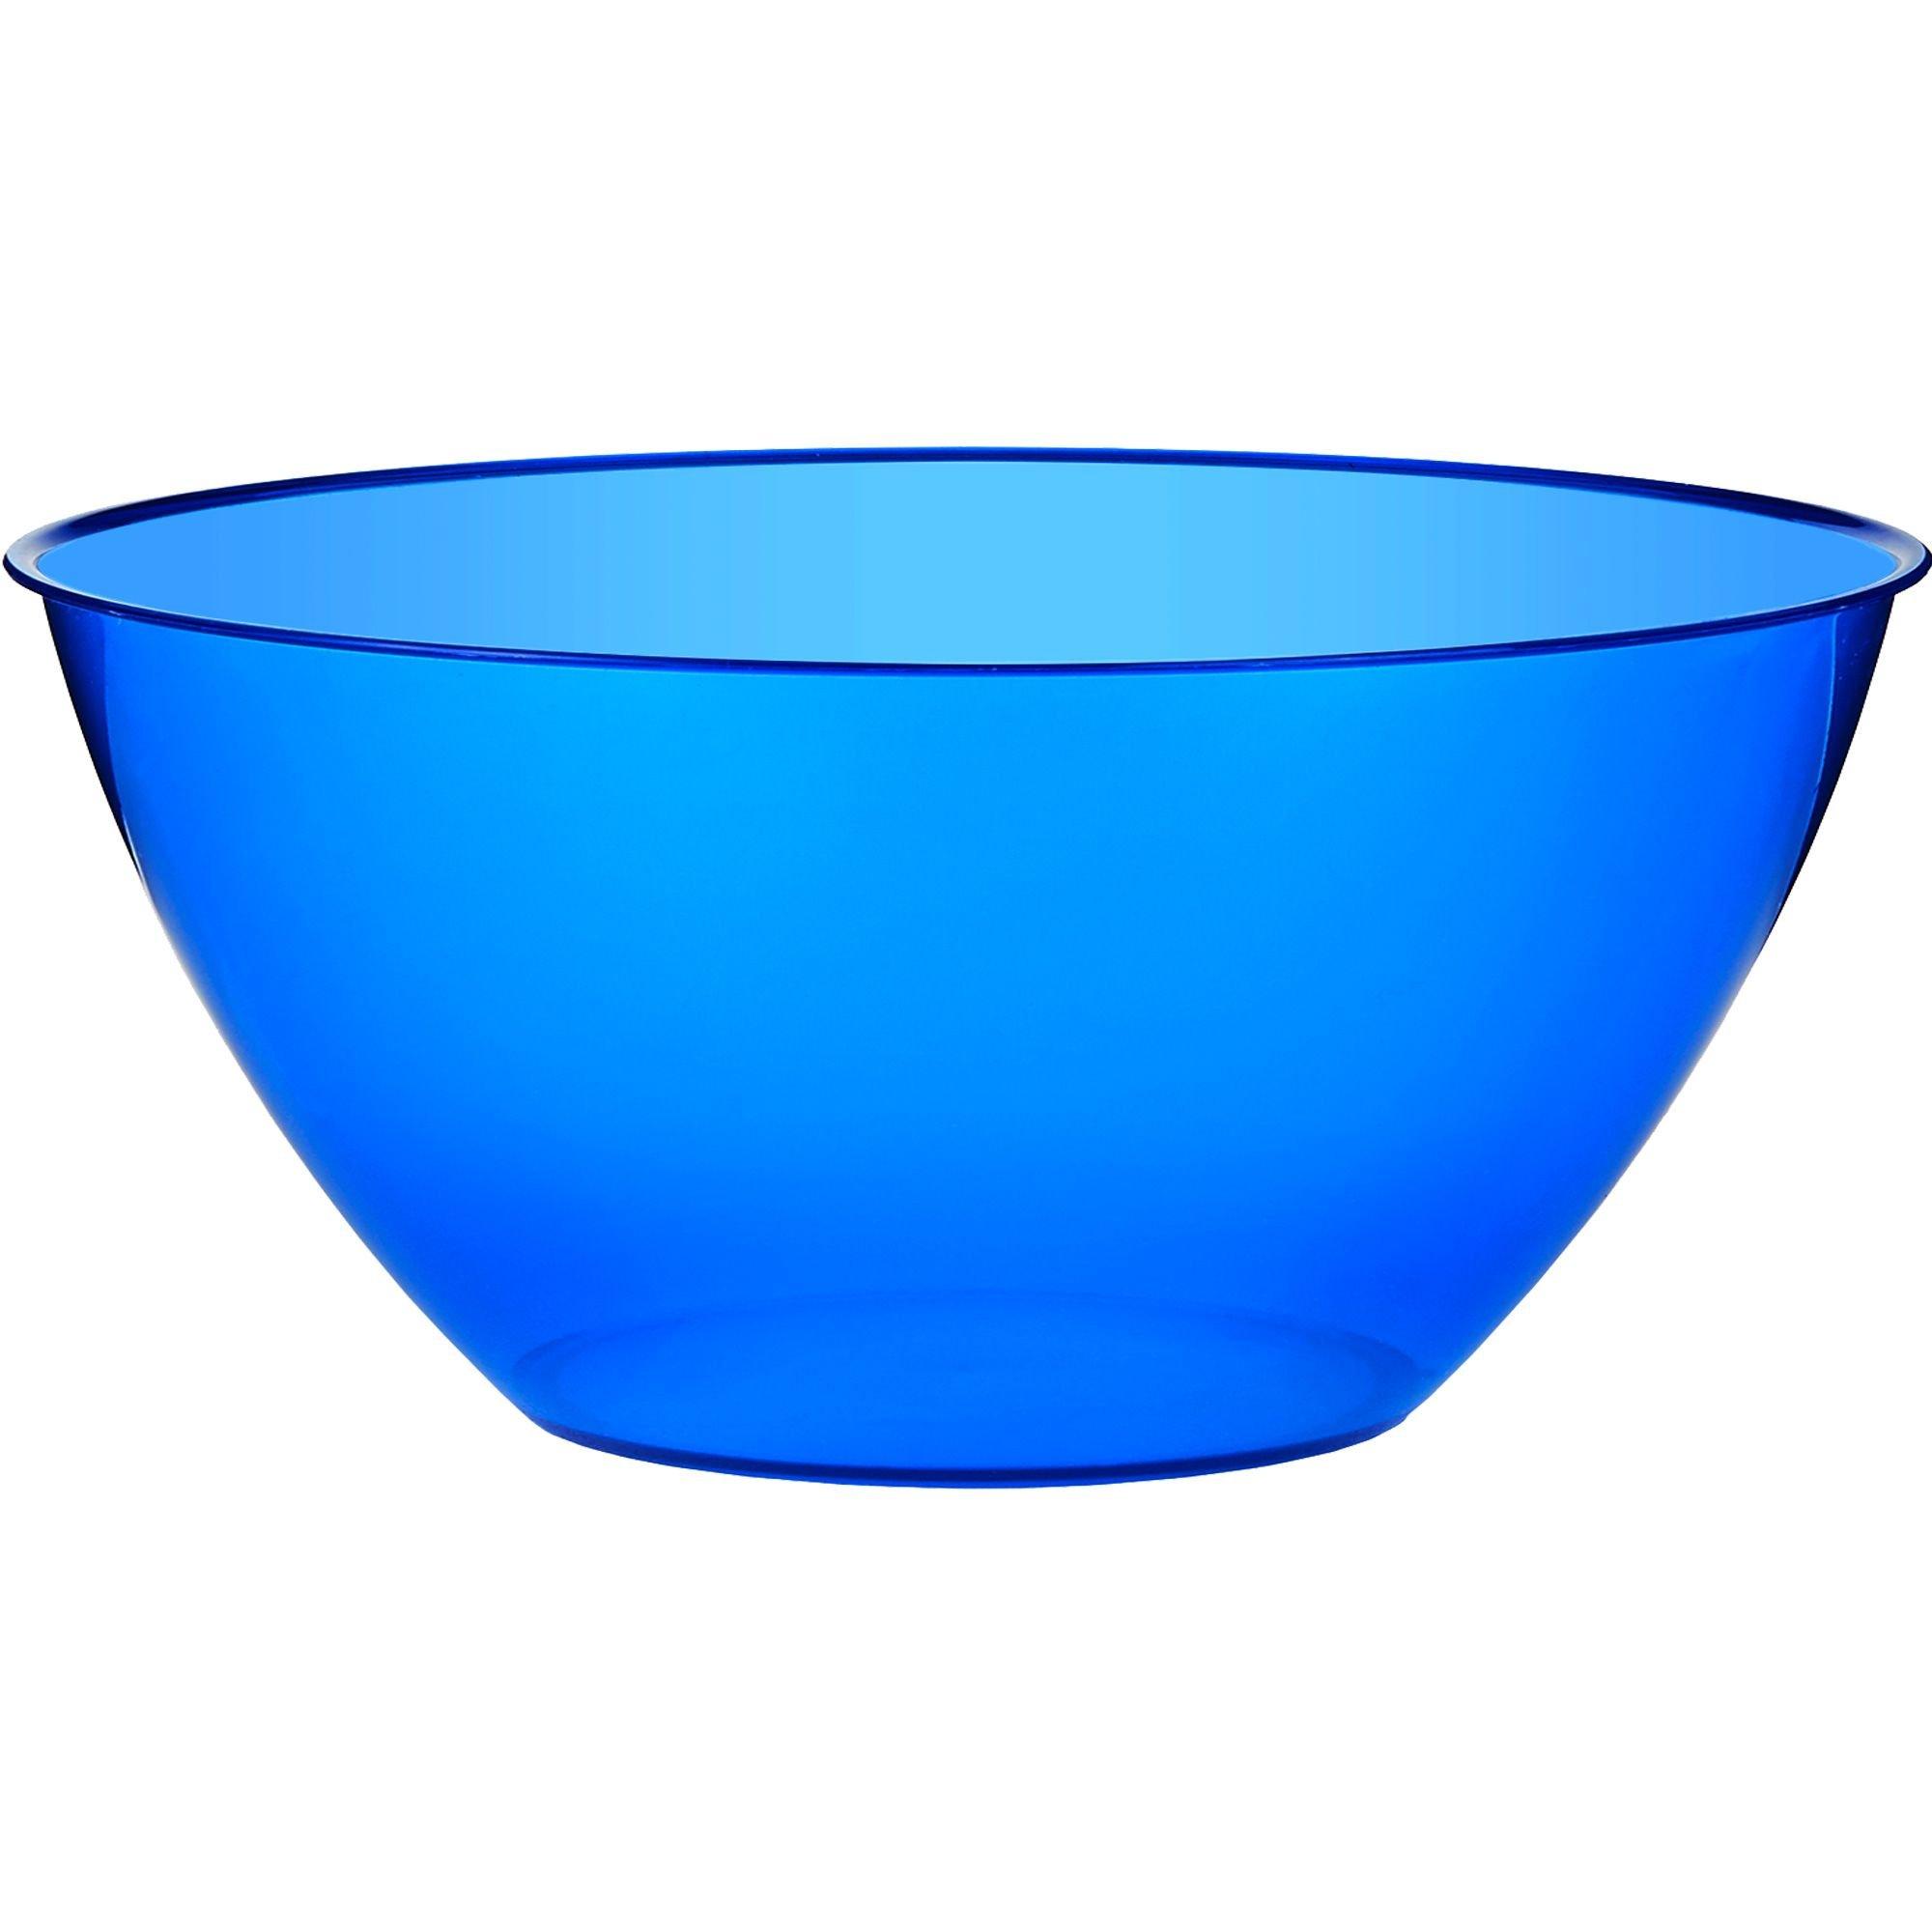 5 qt. Bowl - Bright Royal Blue